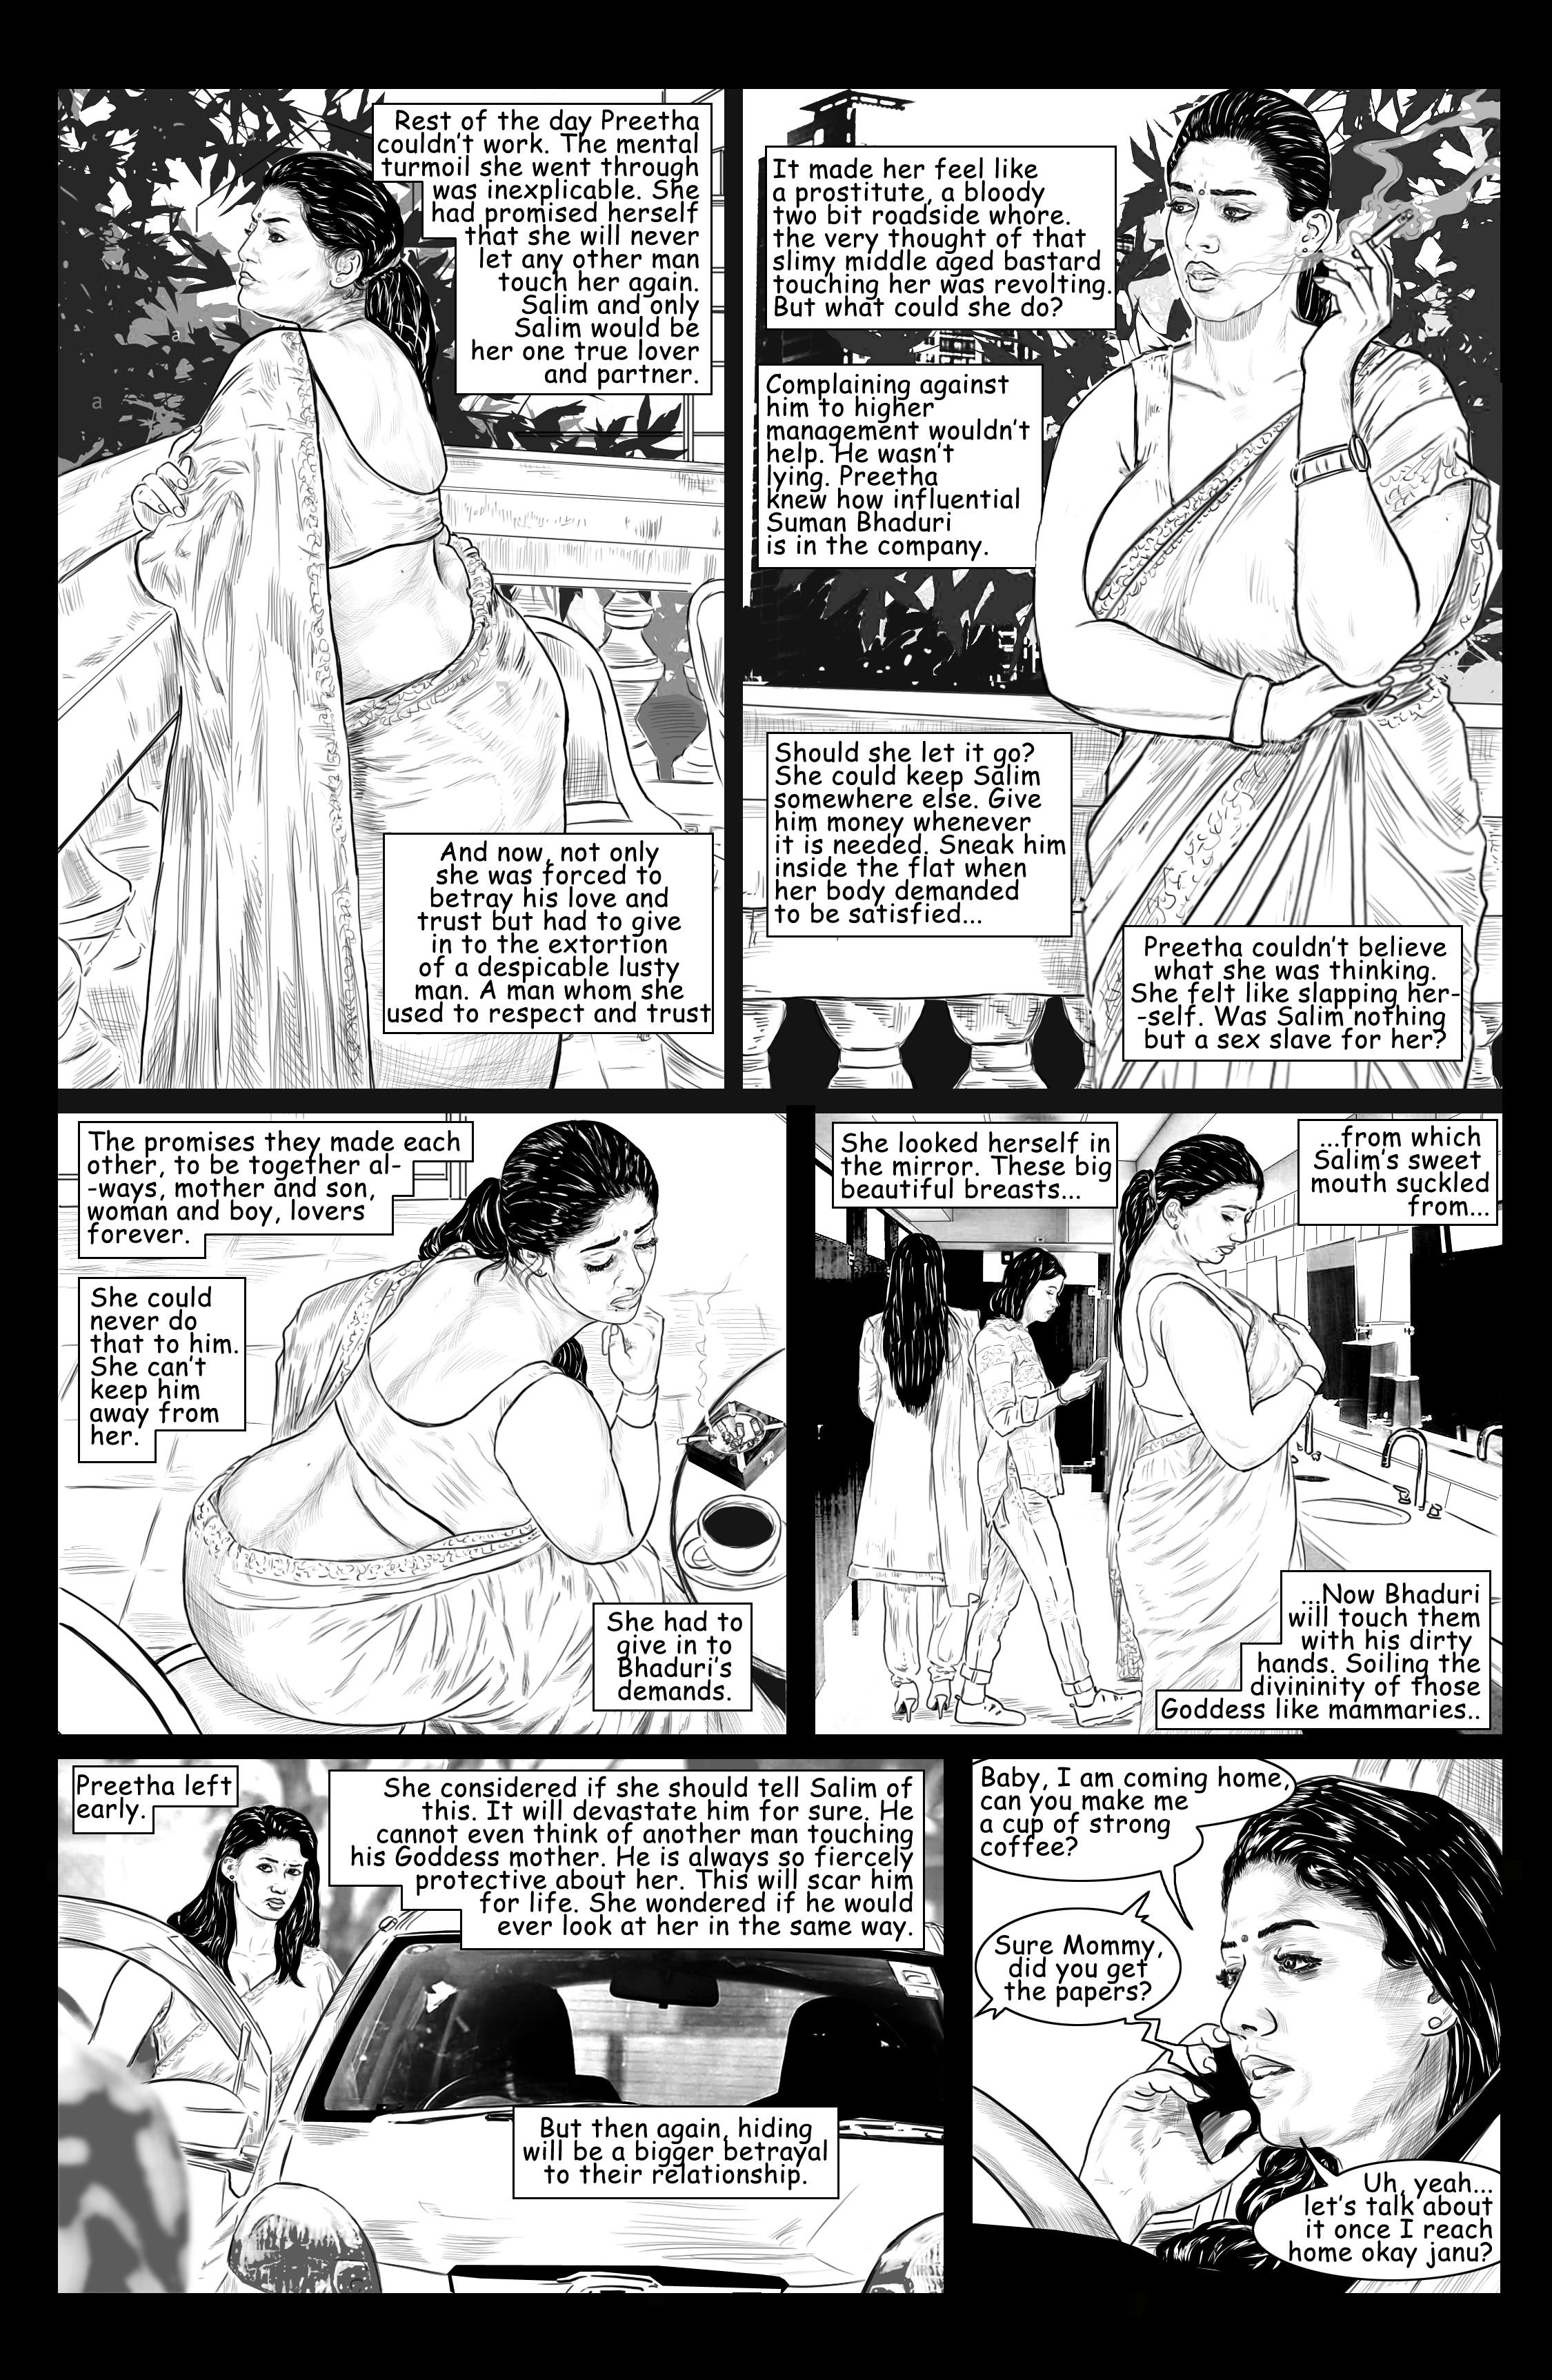 Preetha Sex - Motherhood â€“ A Tale Of Love [Amarsroshta] - 4 . The Deal - Chapter 4  [Amarsroshta] - AllPornComic